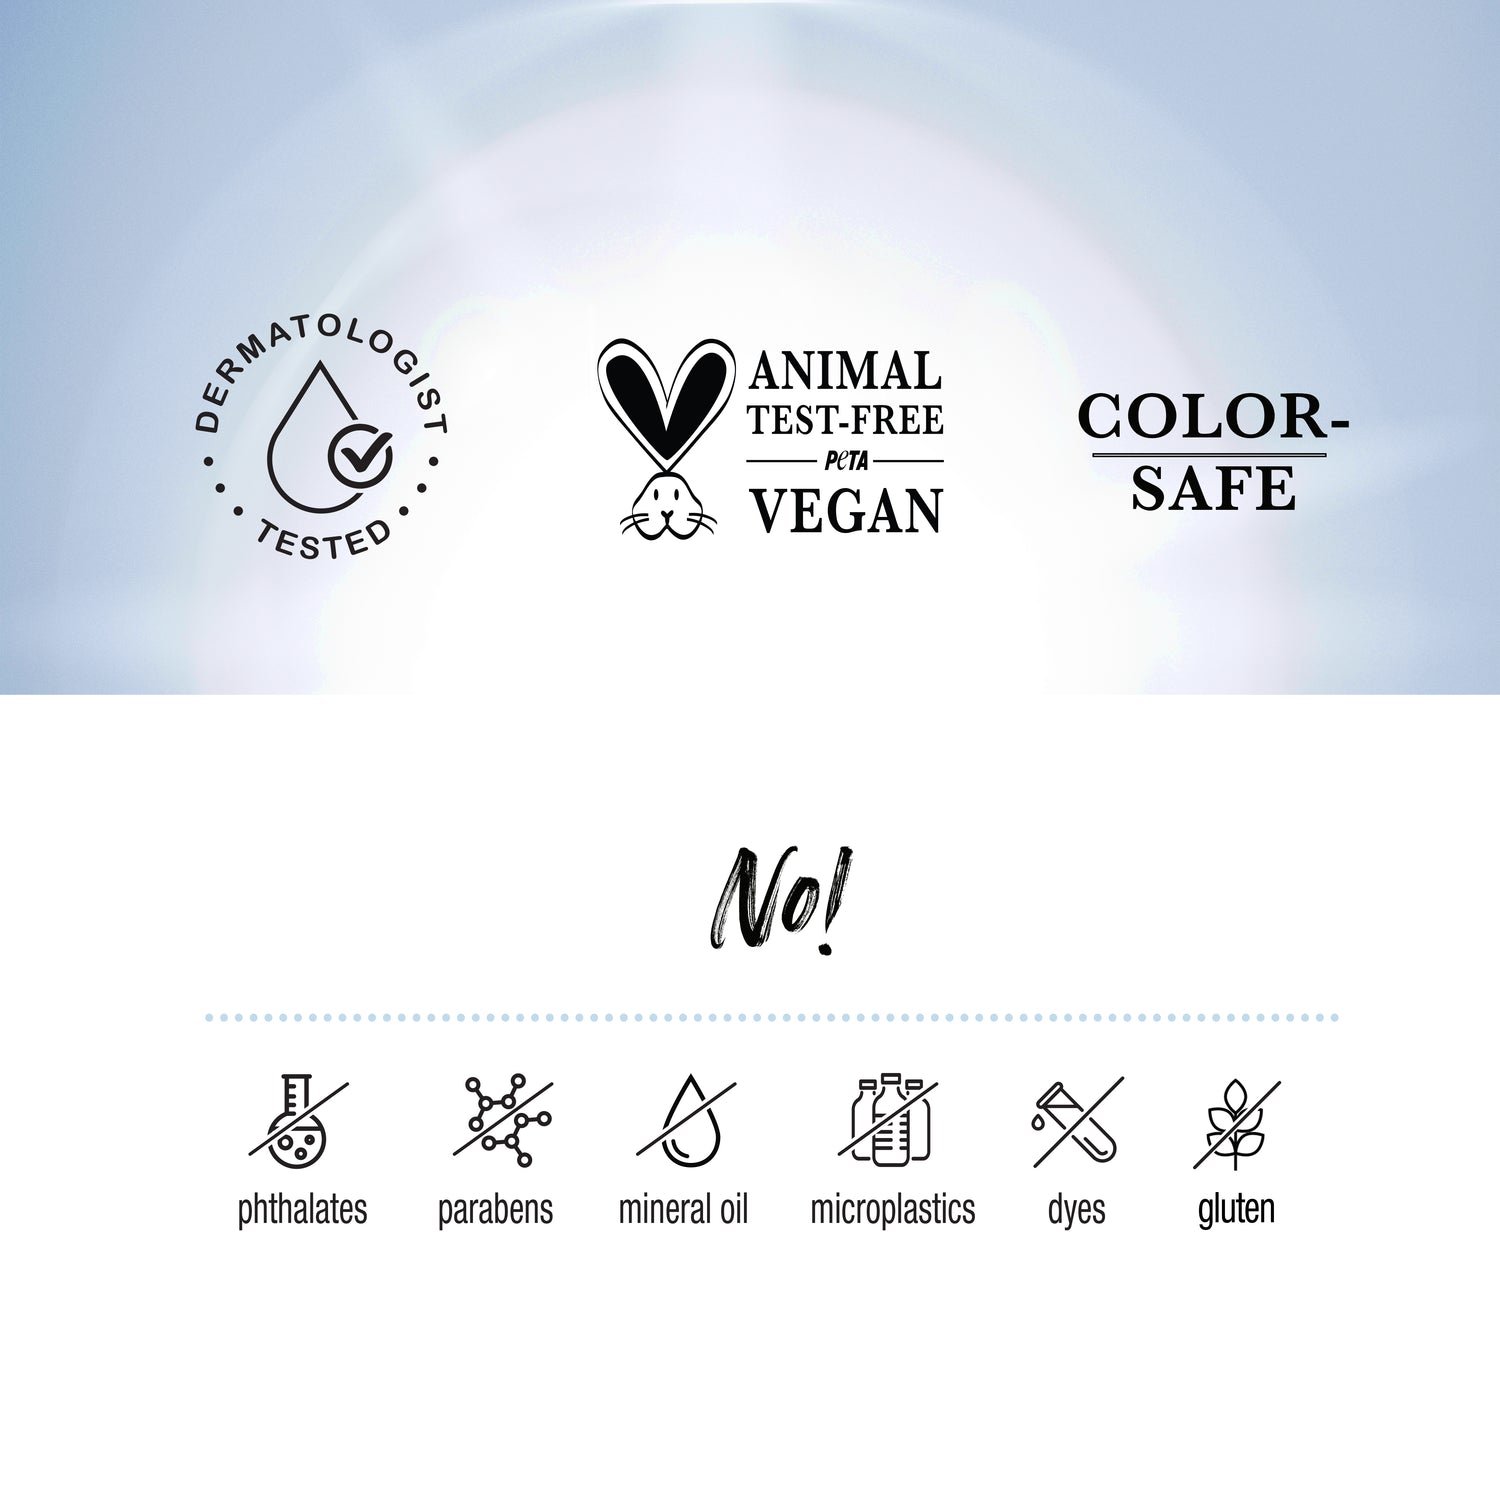 Dermatologist tested, animal test-free, PETA vegan, color-safe. No phthalates, parabens, mineral oil, microplastics, dyes, or gluten.